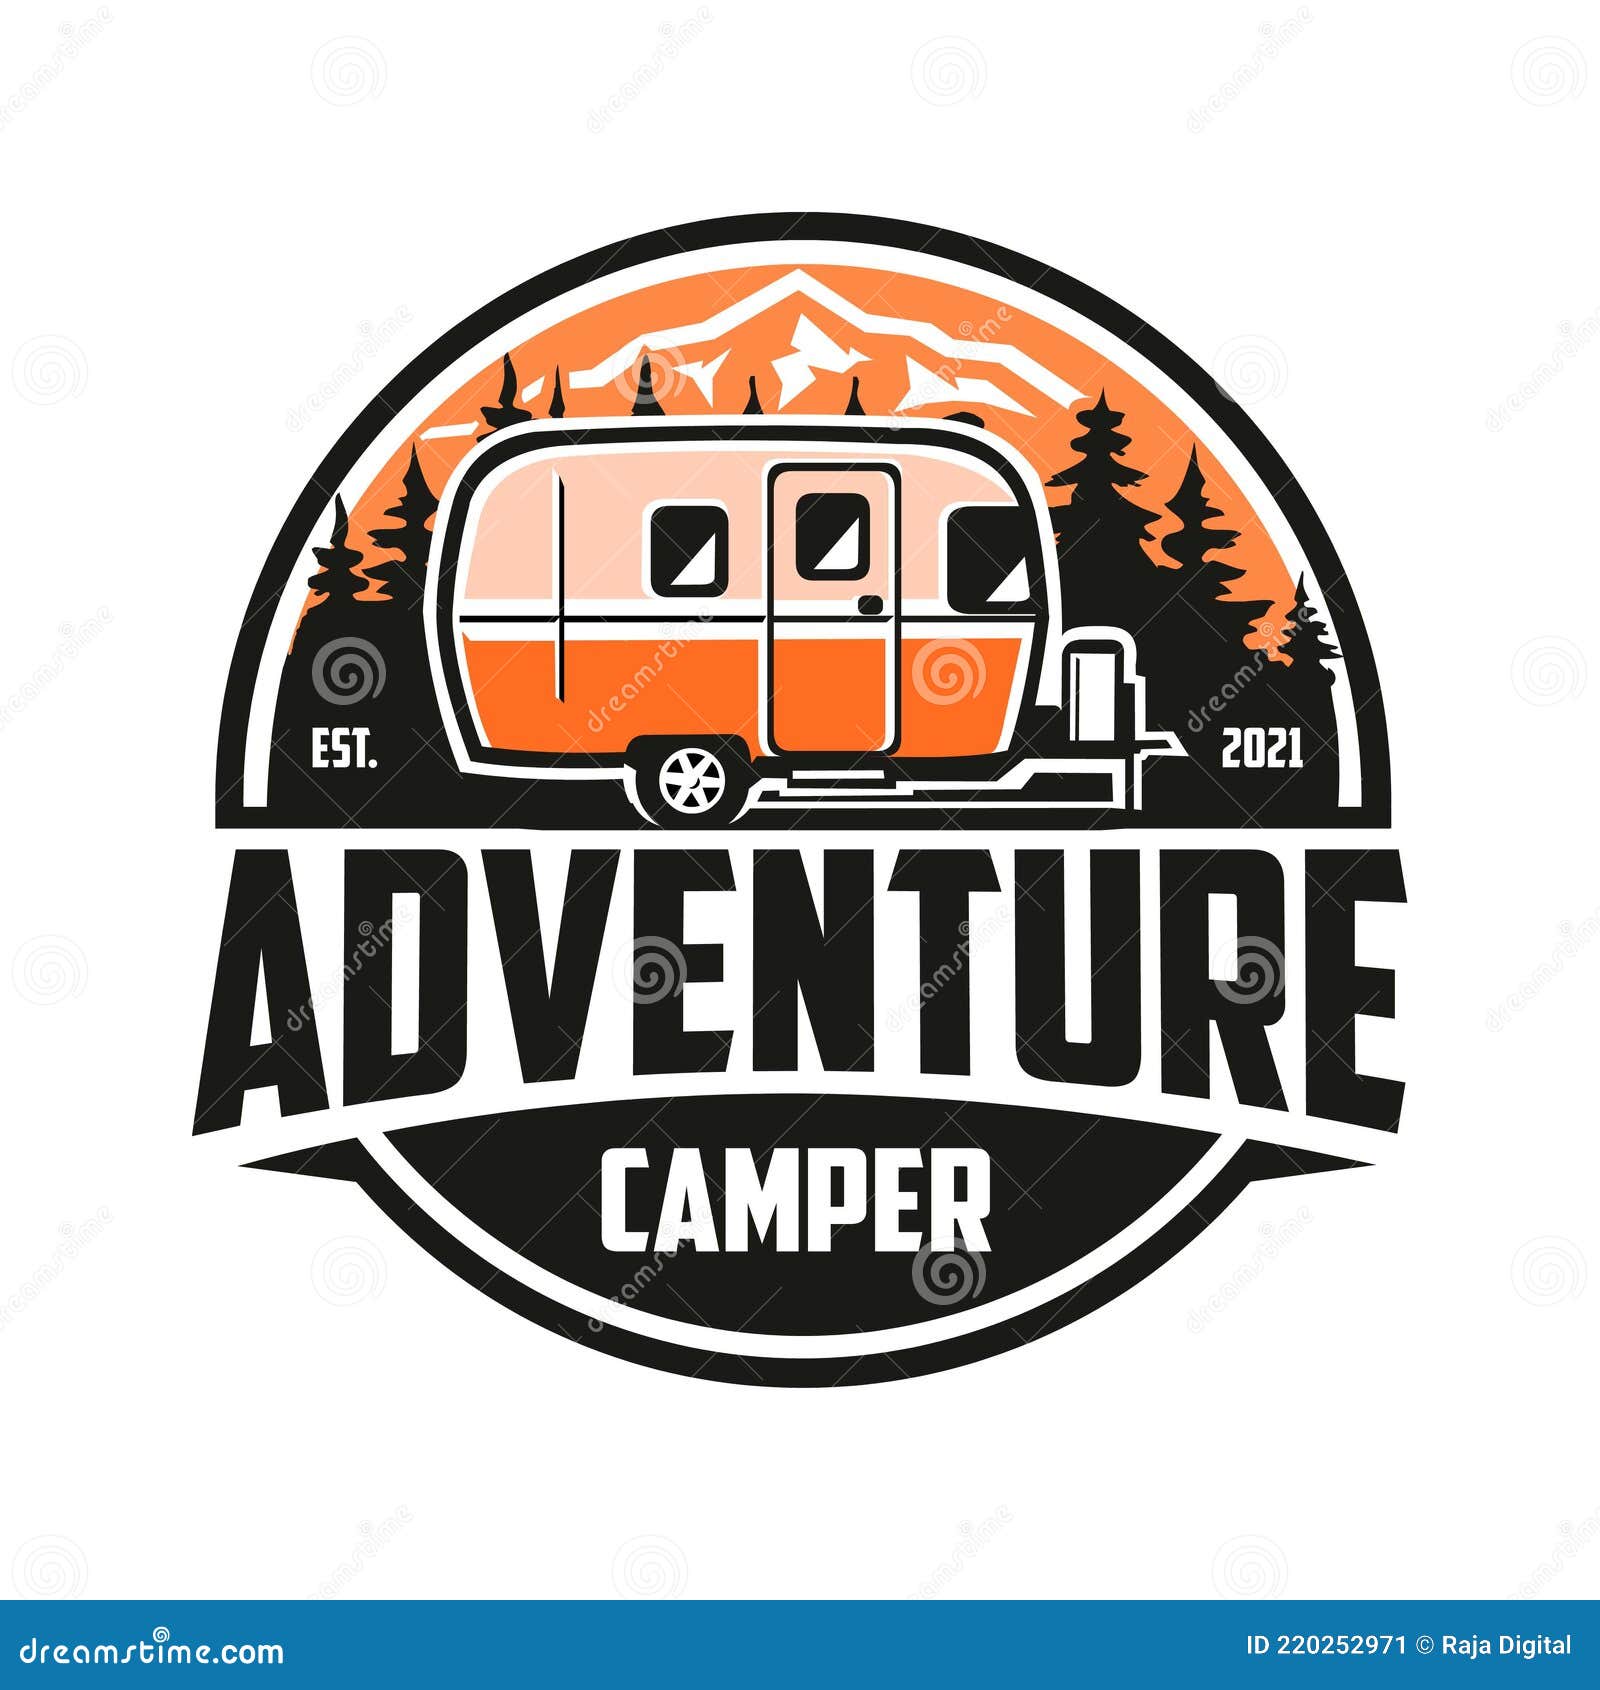 adventure rv trailer camper logo   eps